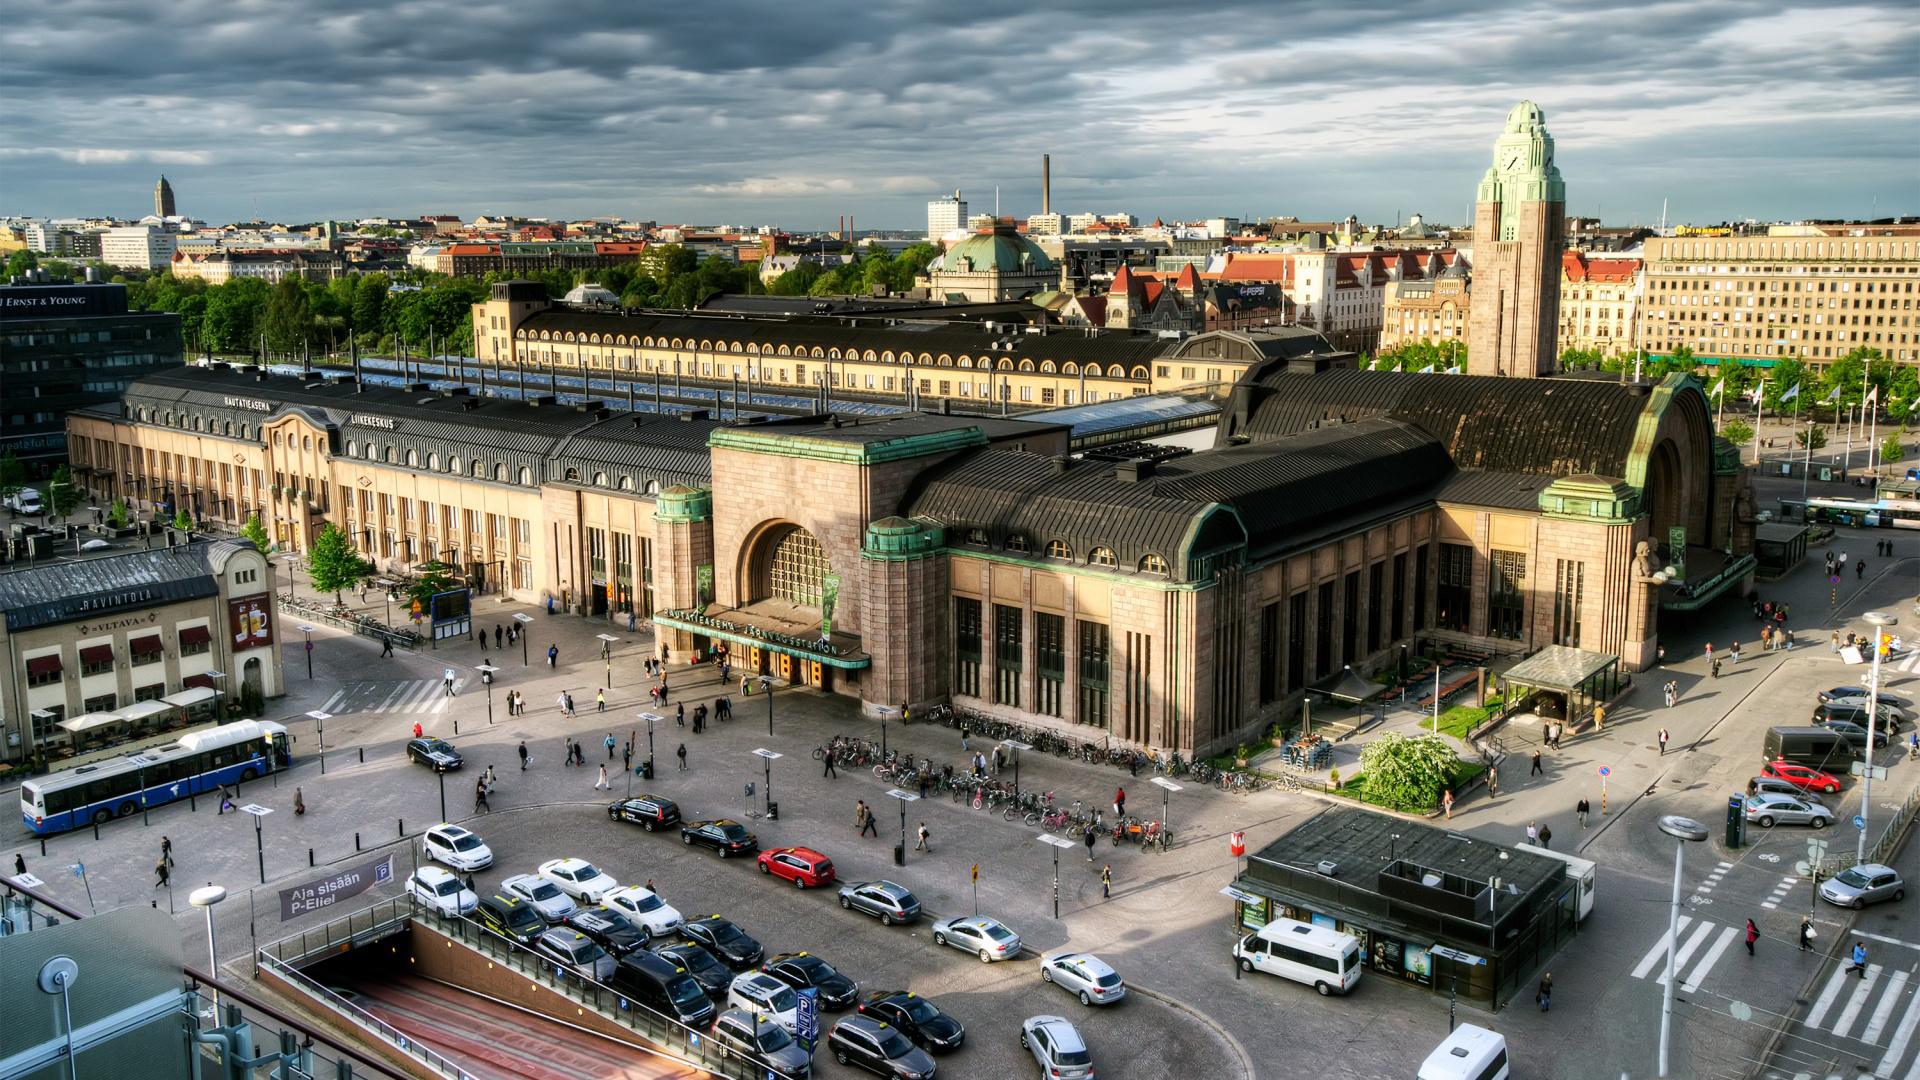 Finland: Helsinki Central railway station, Suomi, Infrastructure. 1920x1080 Full HD Wallpaper.